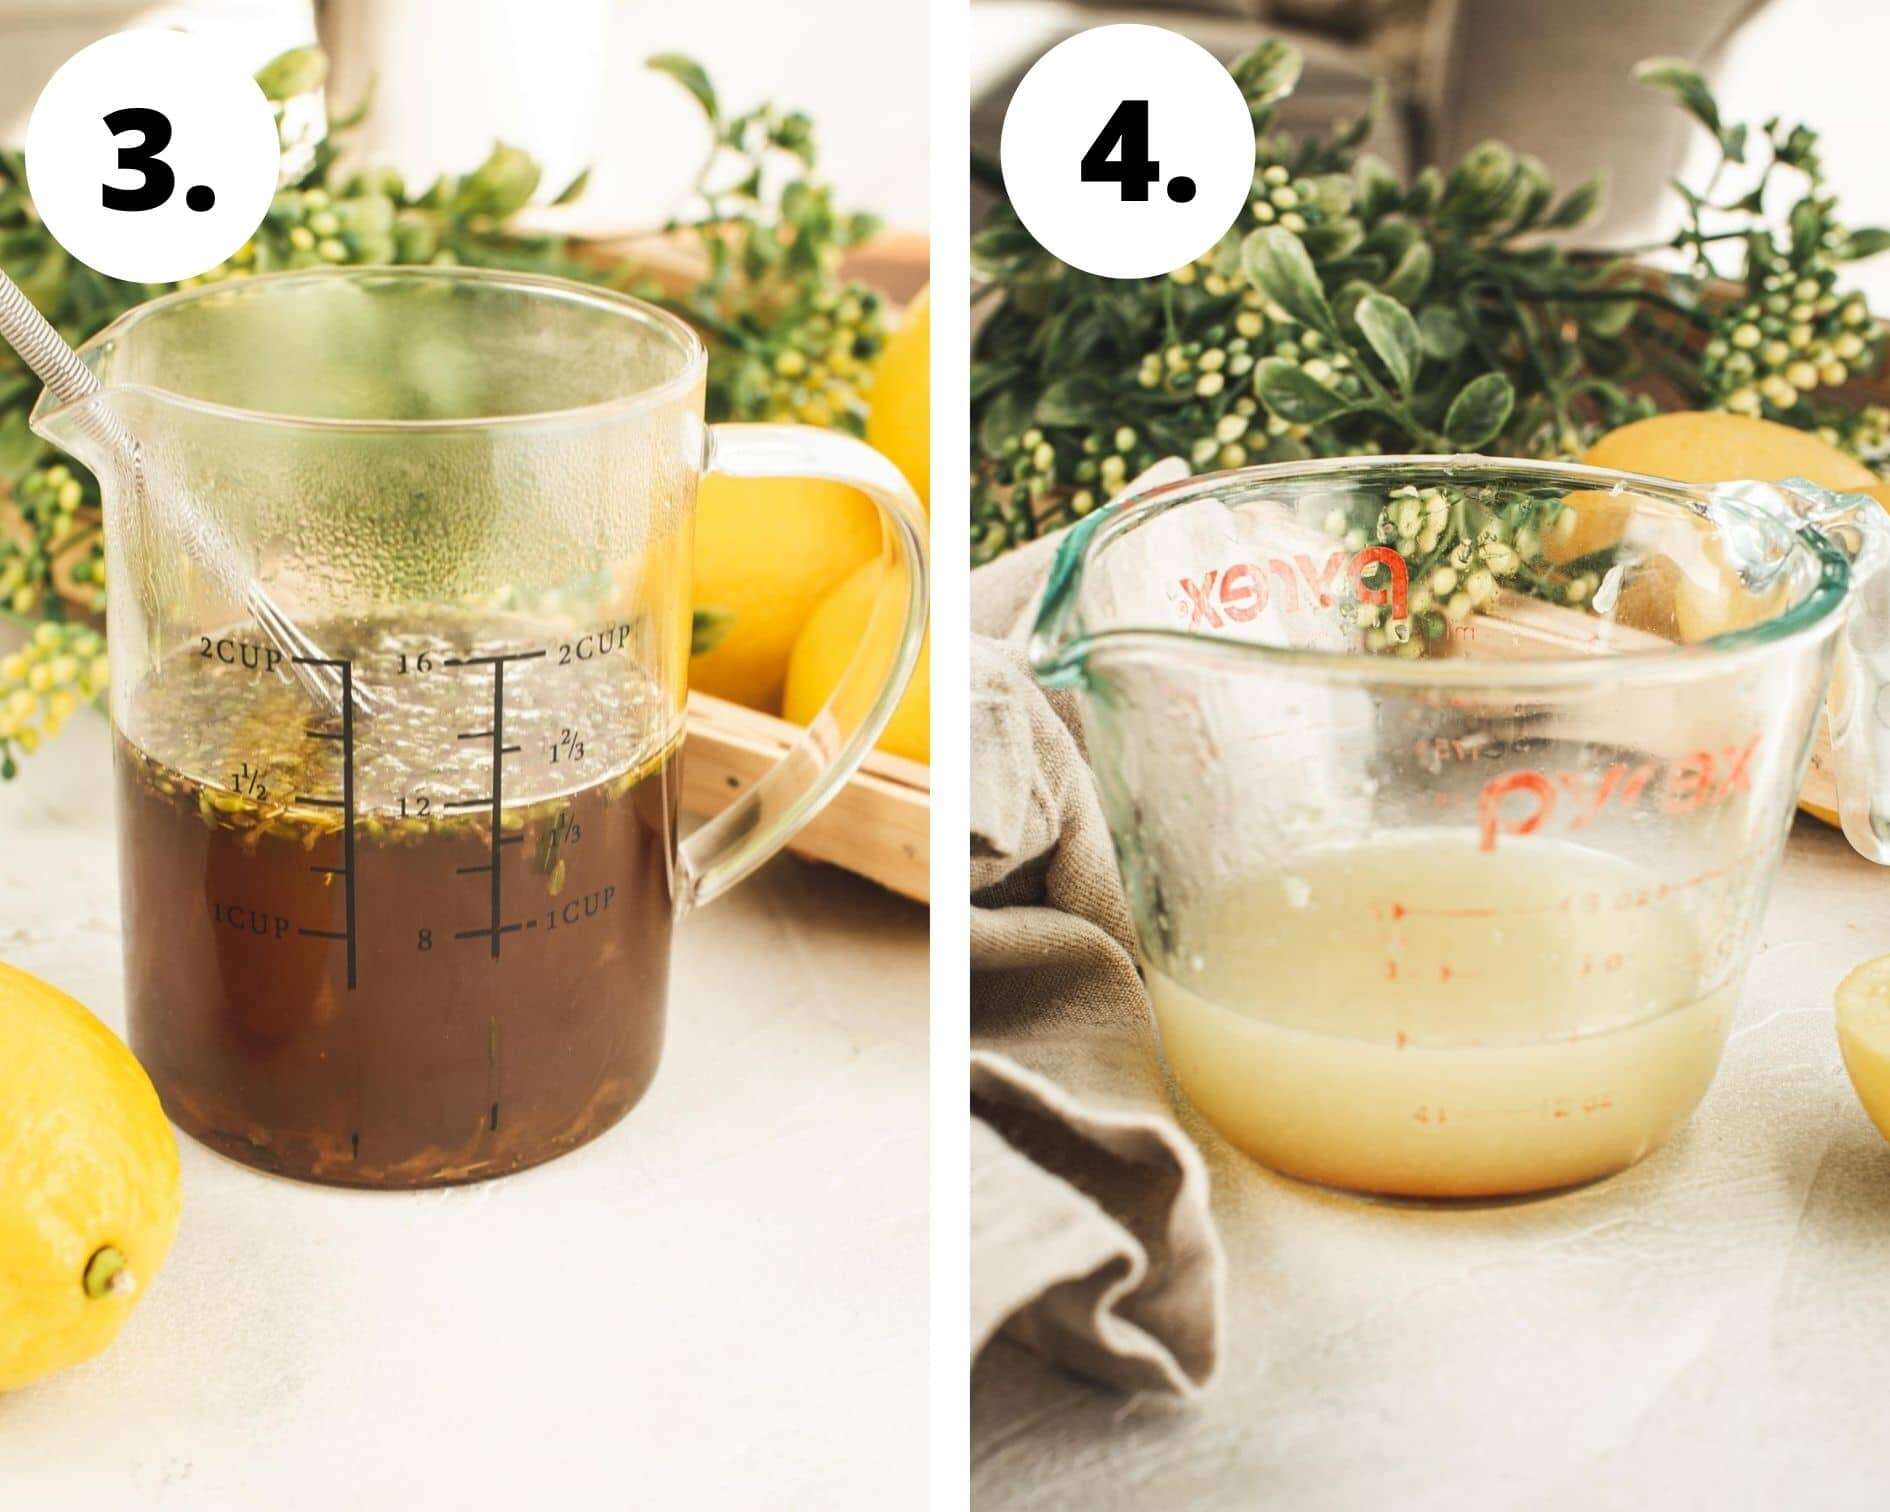 Lavender lemonade process steps 3 and 4.